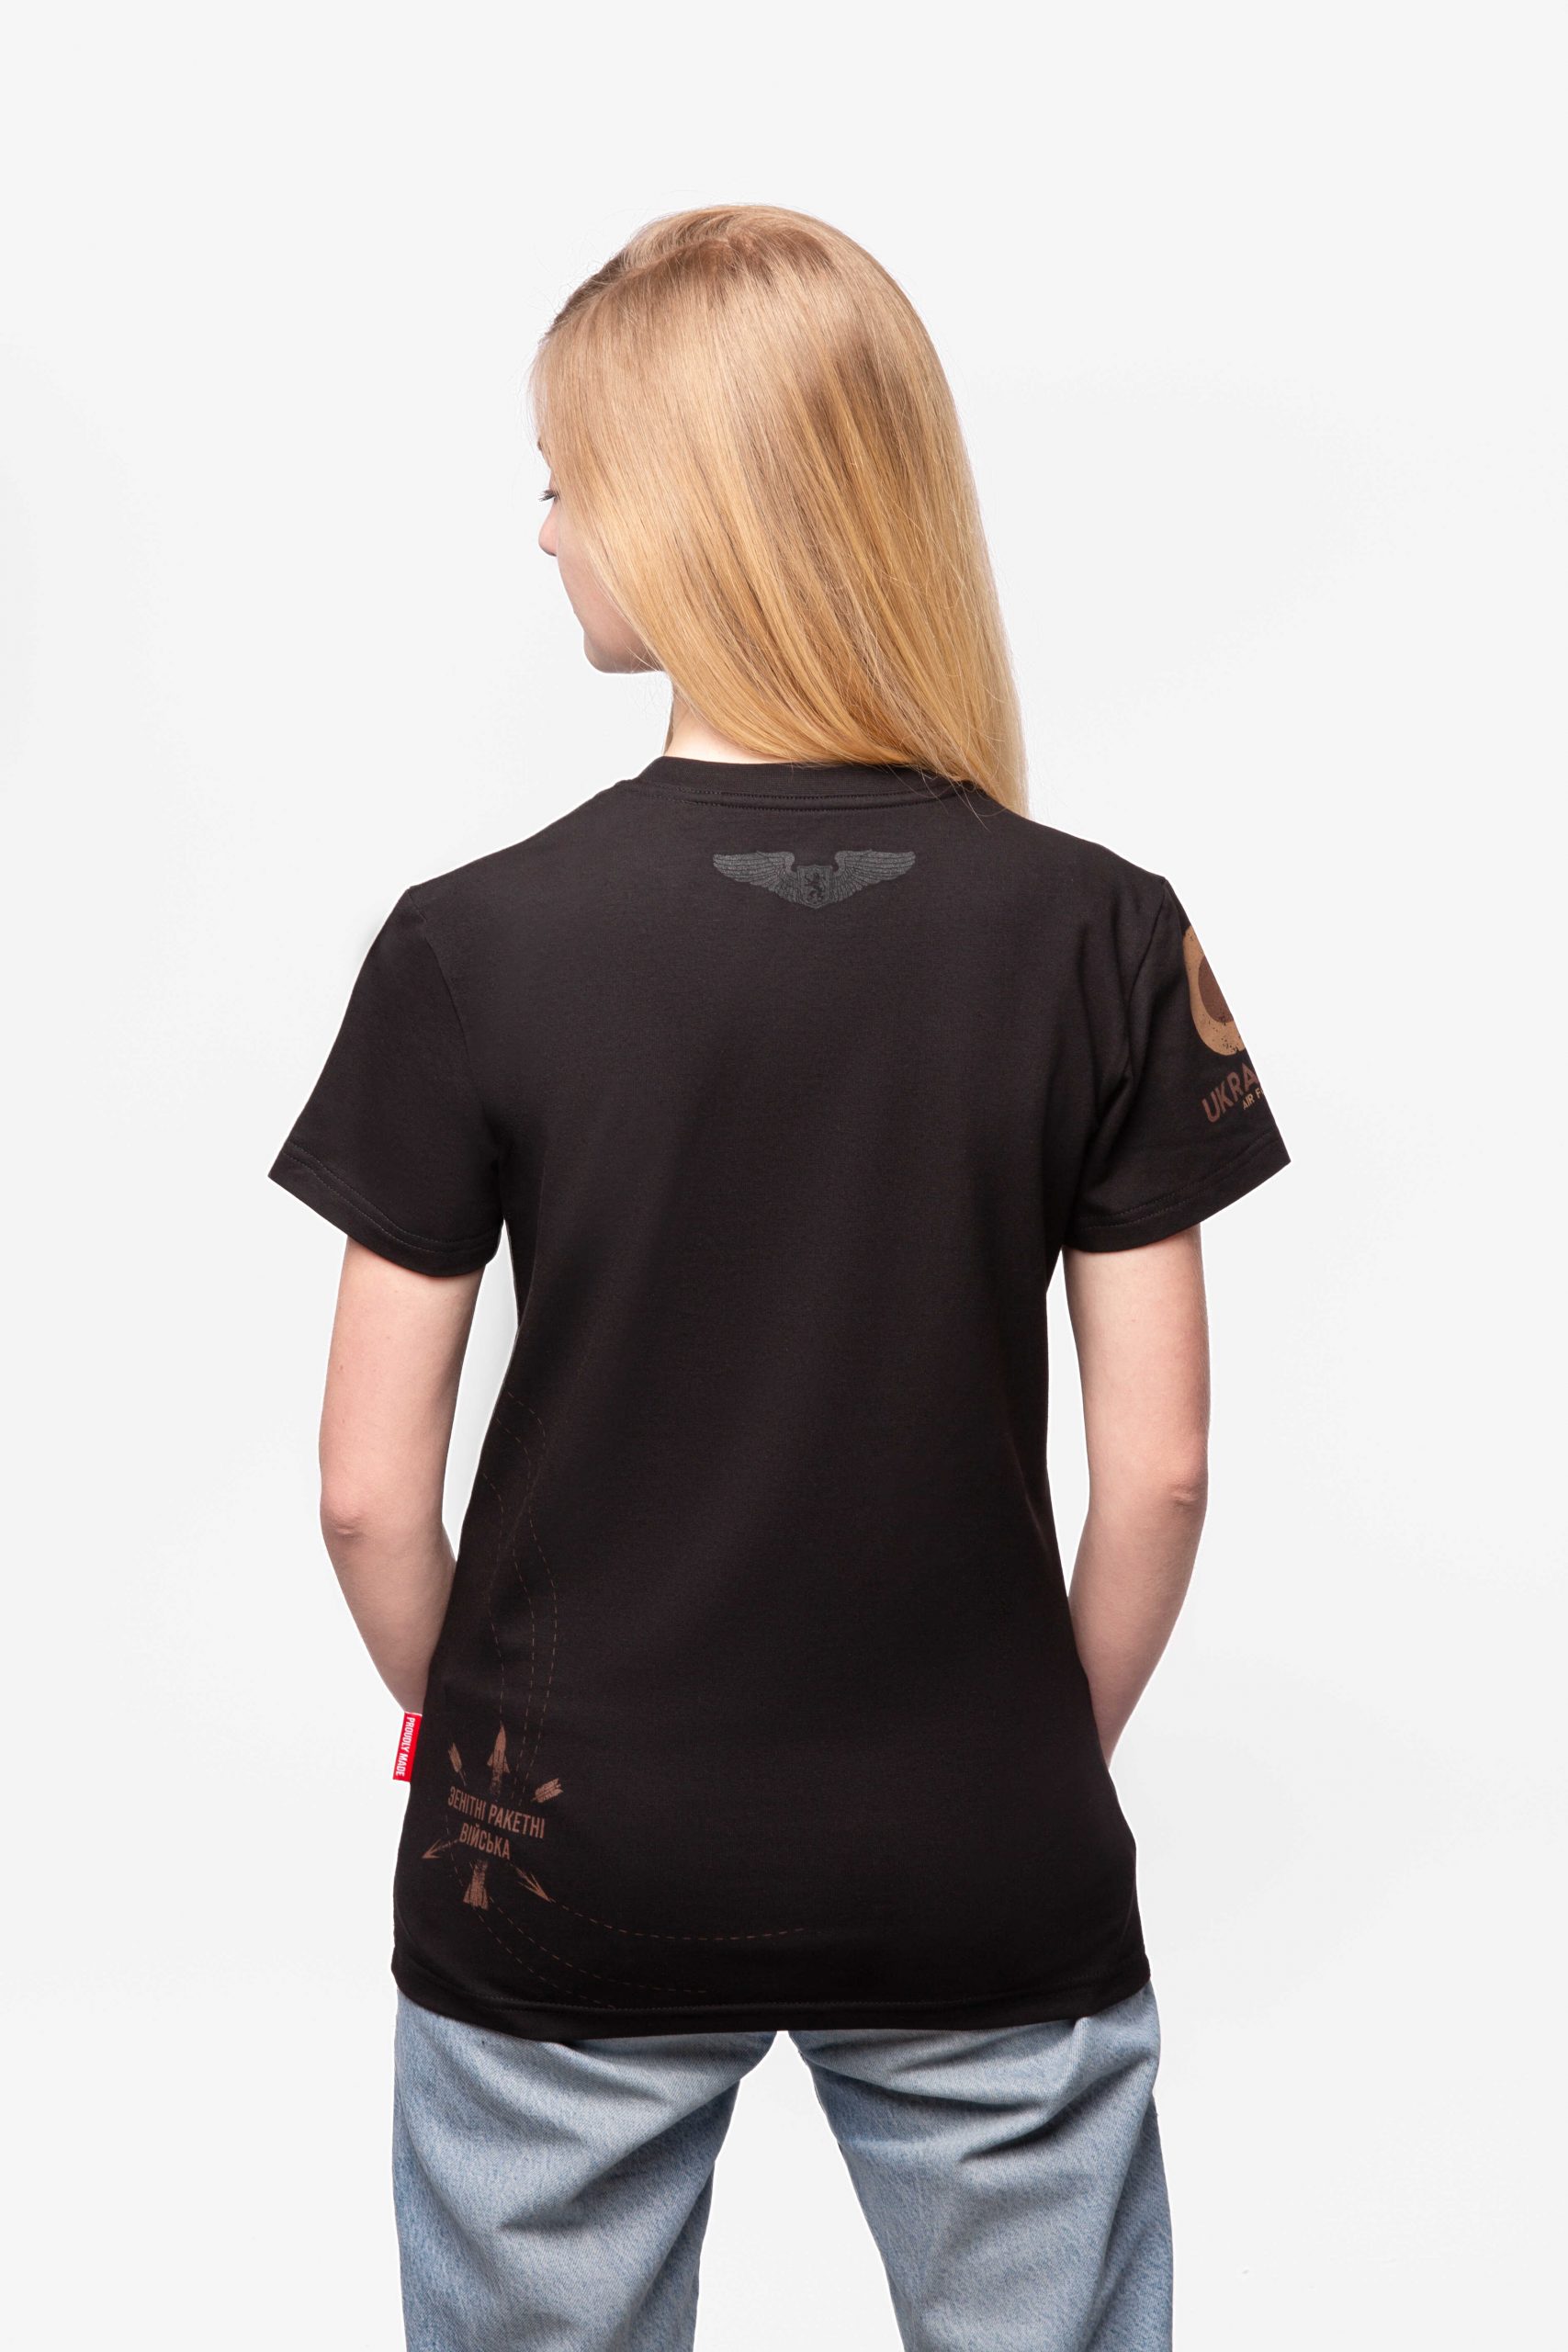 Women's T-Shirt Hornet. Color black. 1.